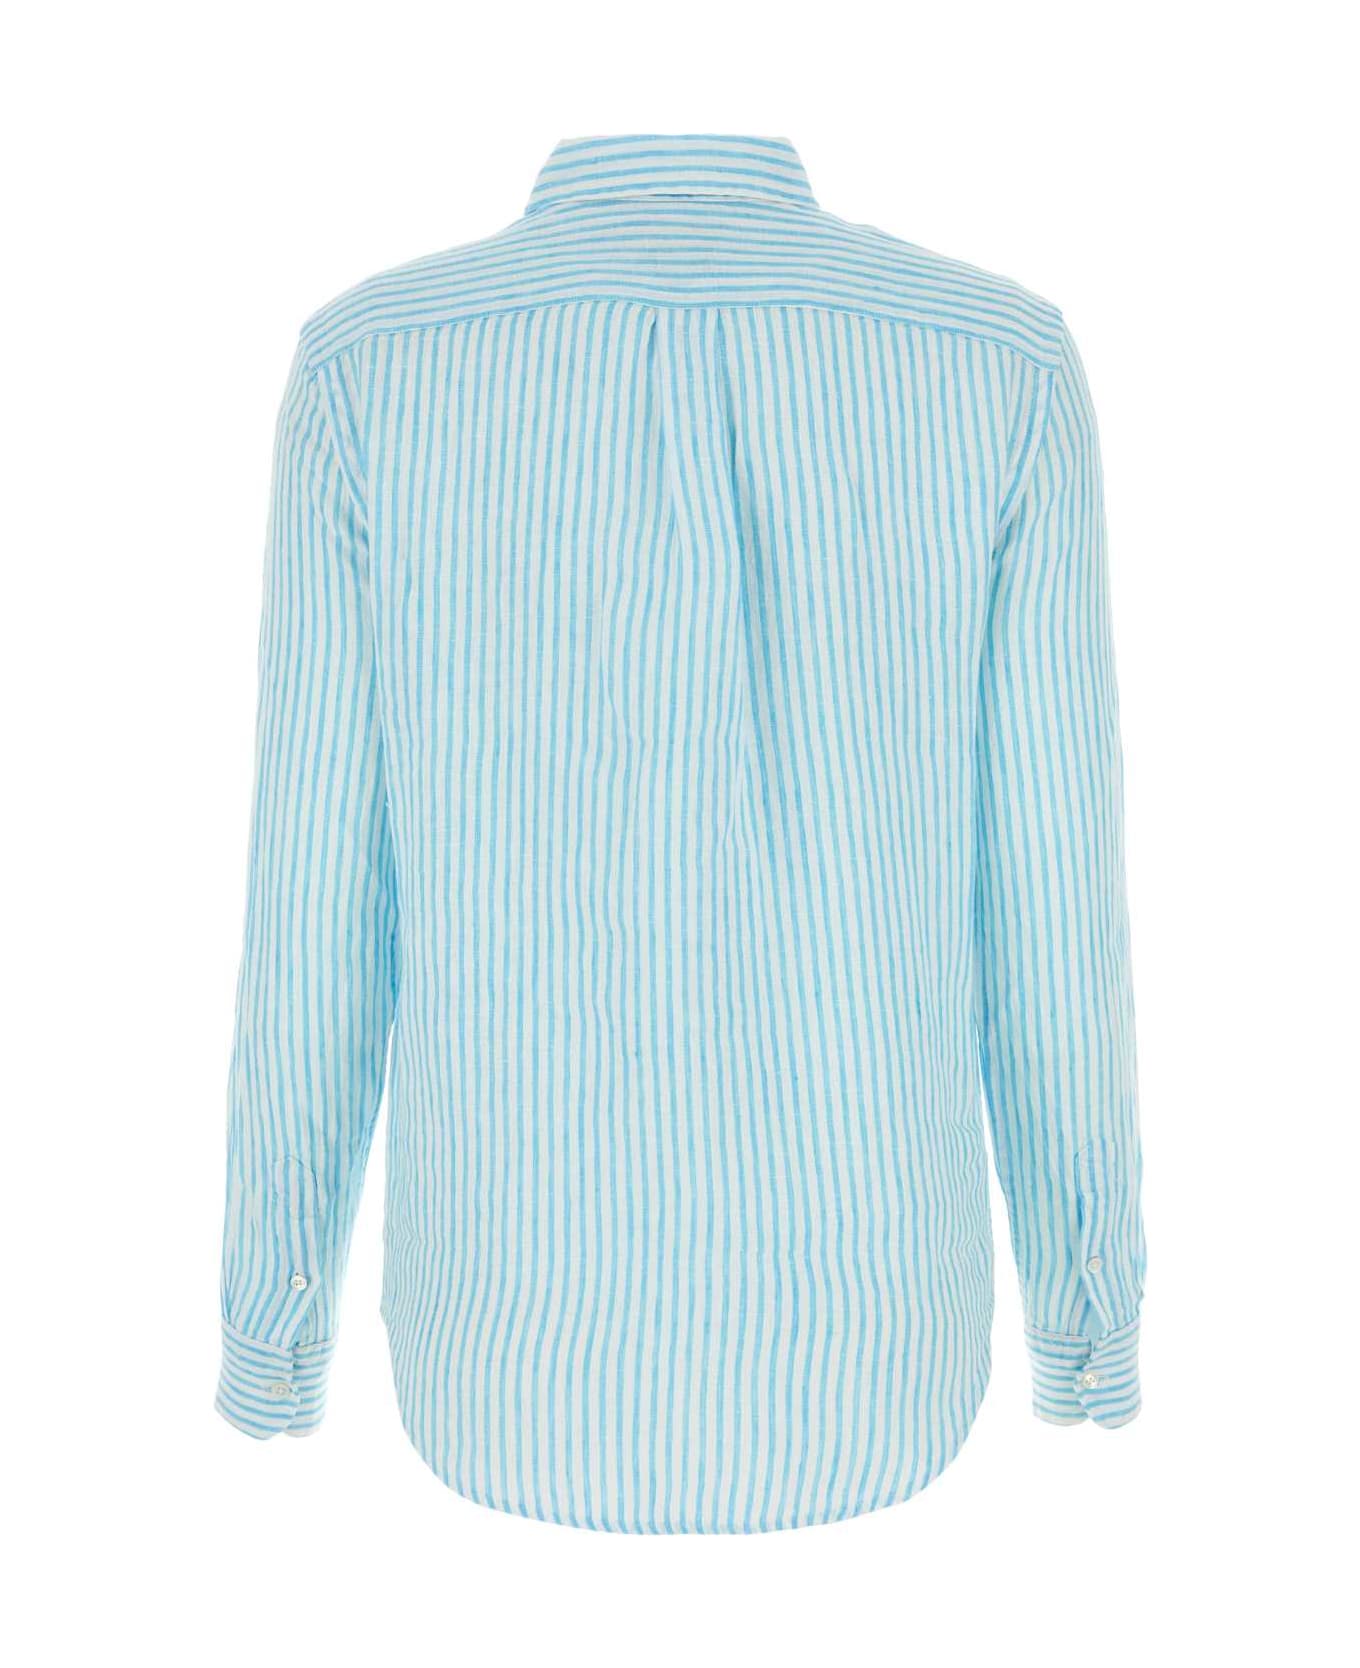 Polo Ralph Lauren Embroidered Linen Shirt - TURQUOISENVA/WHTESTRP